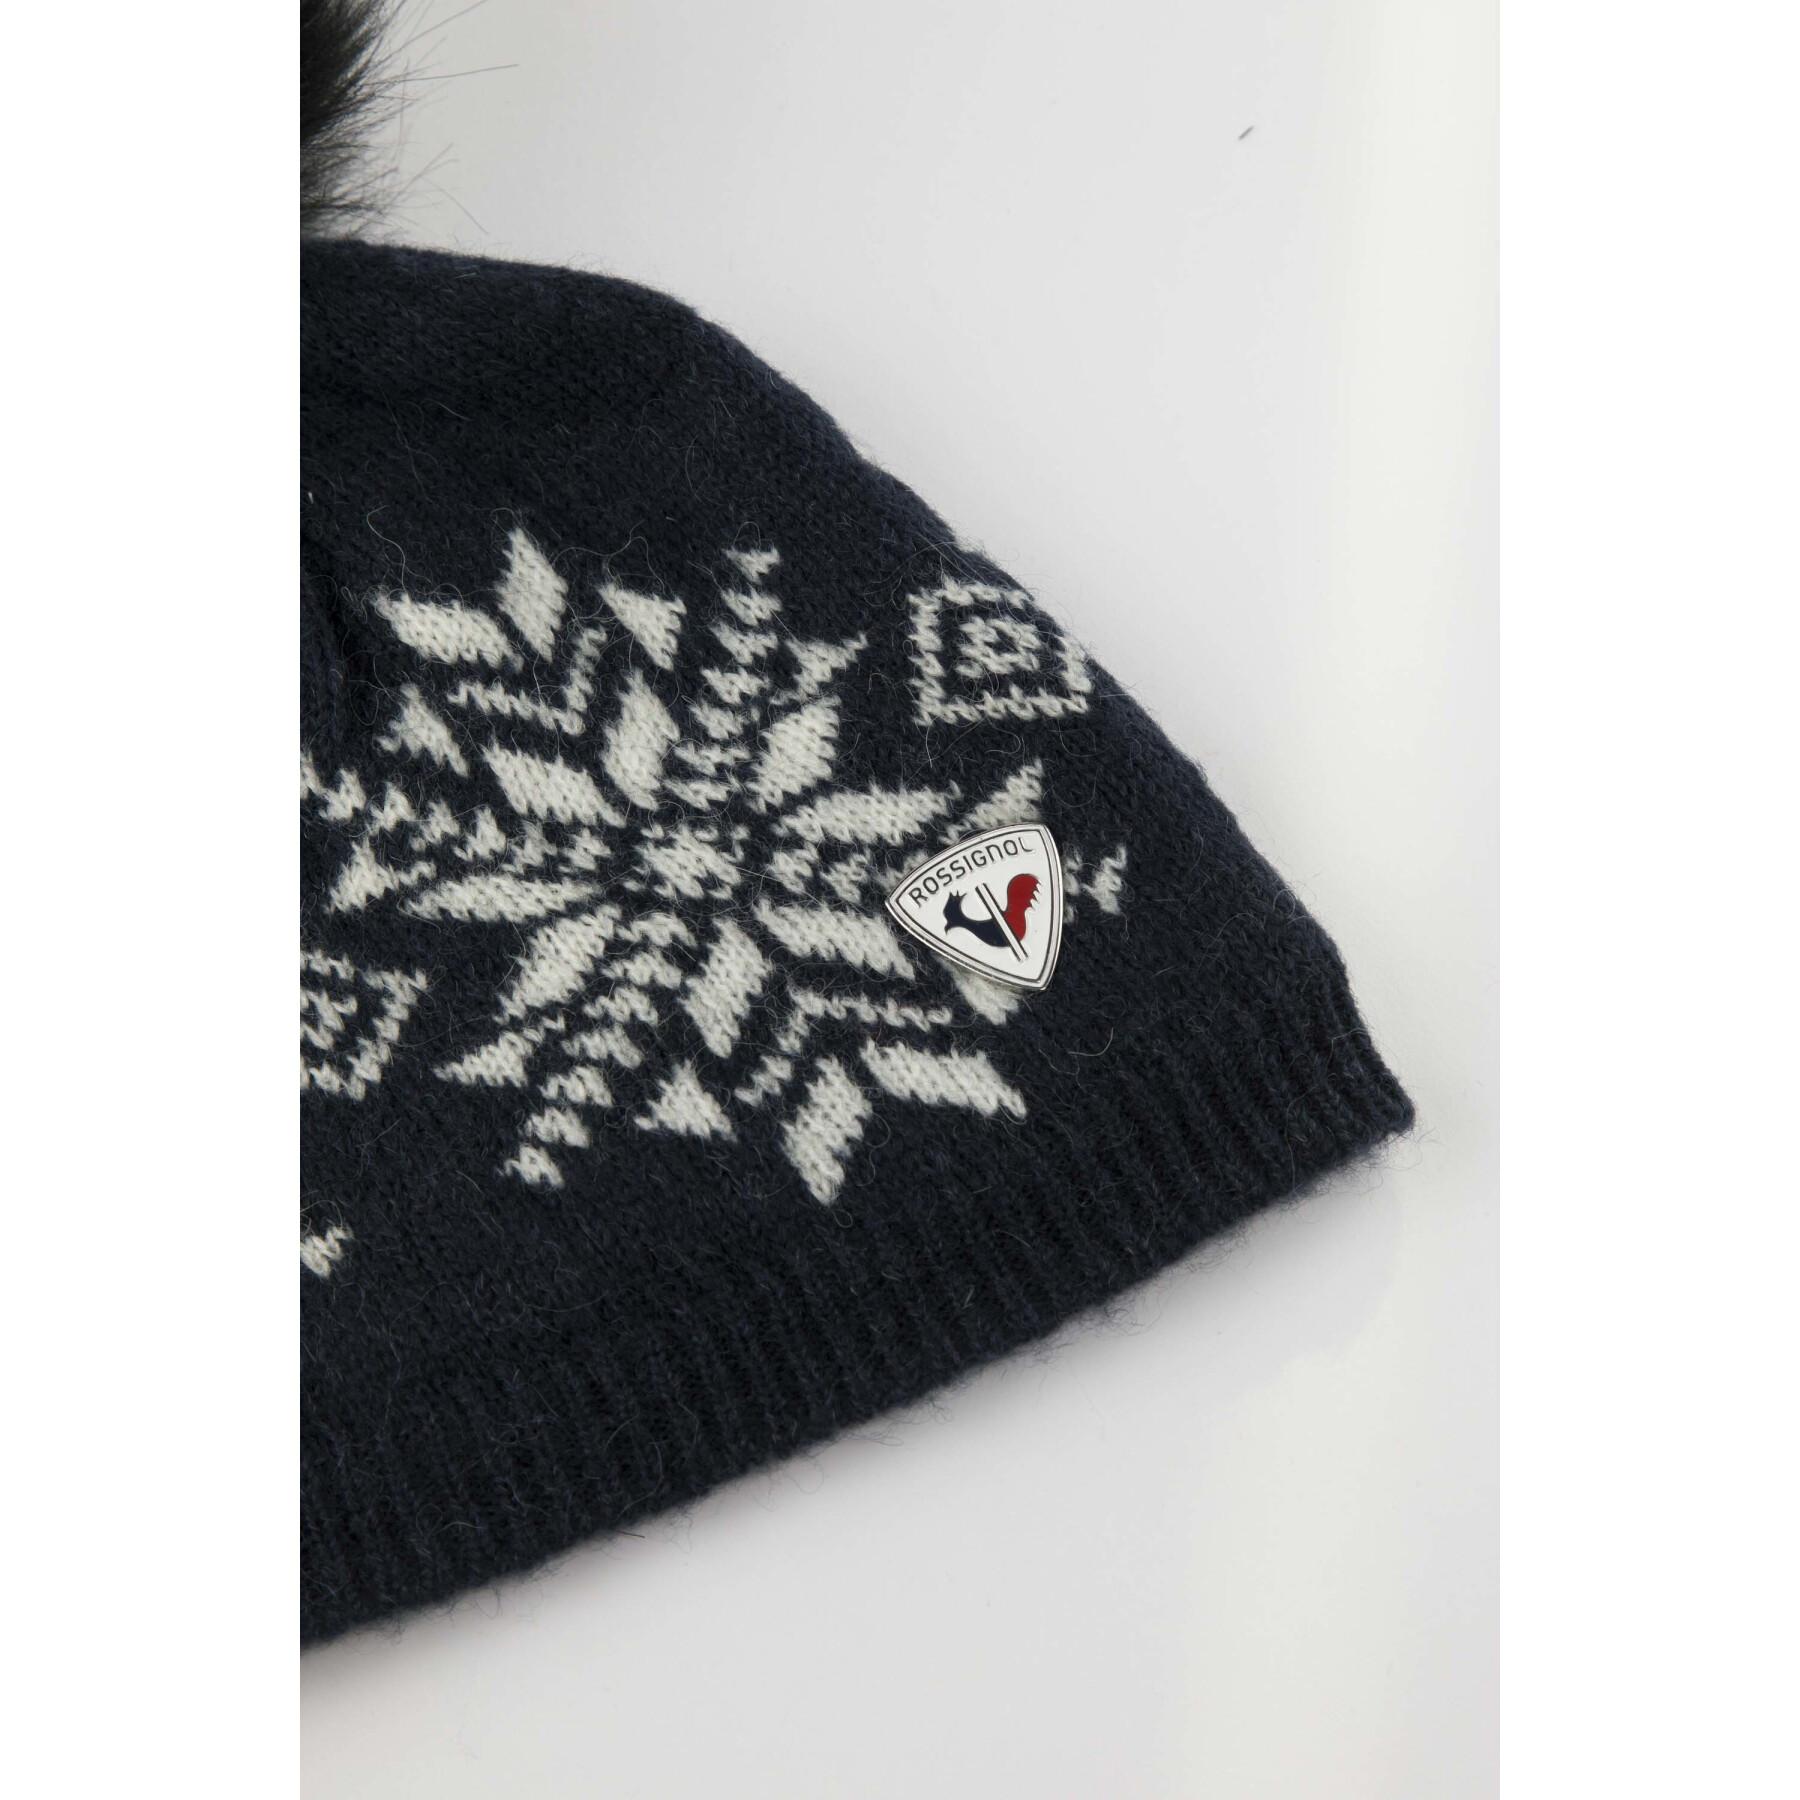 Women's hat Rossignol L3 Snowflake